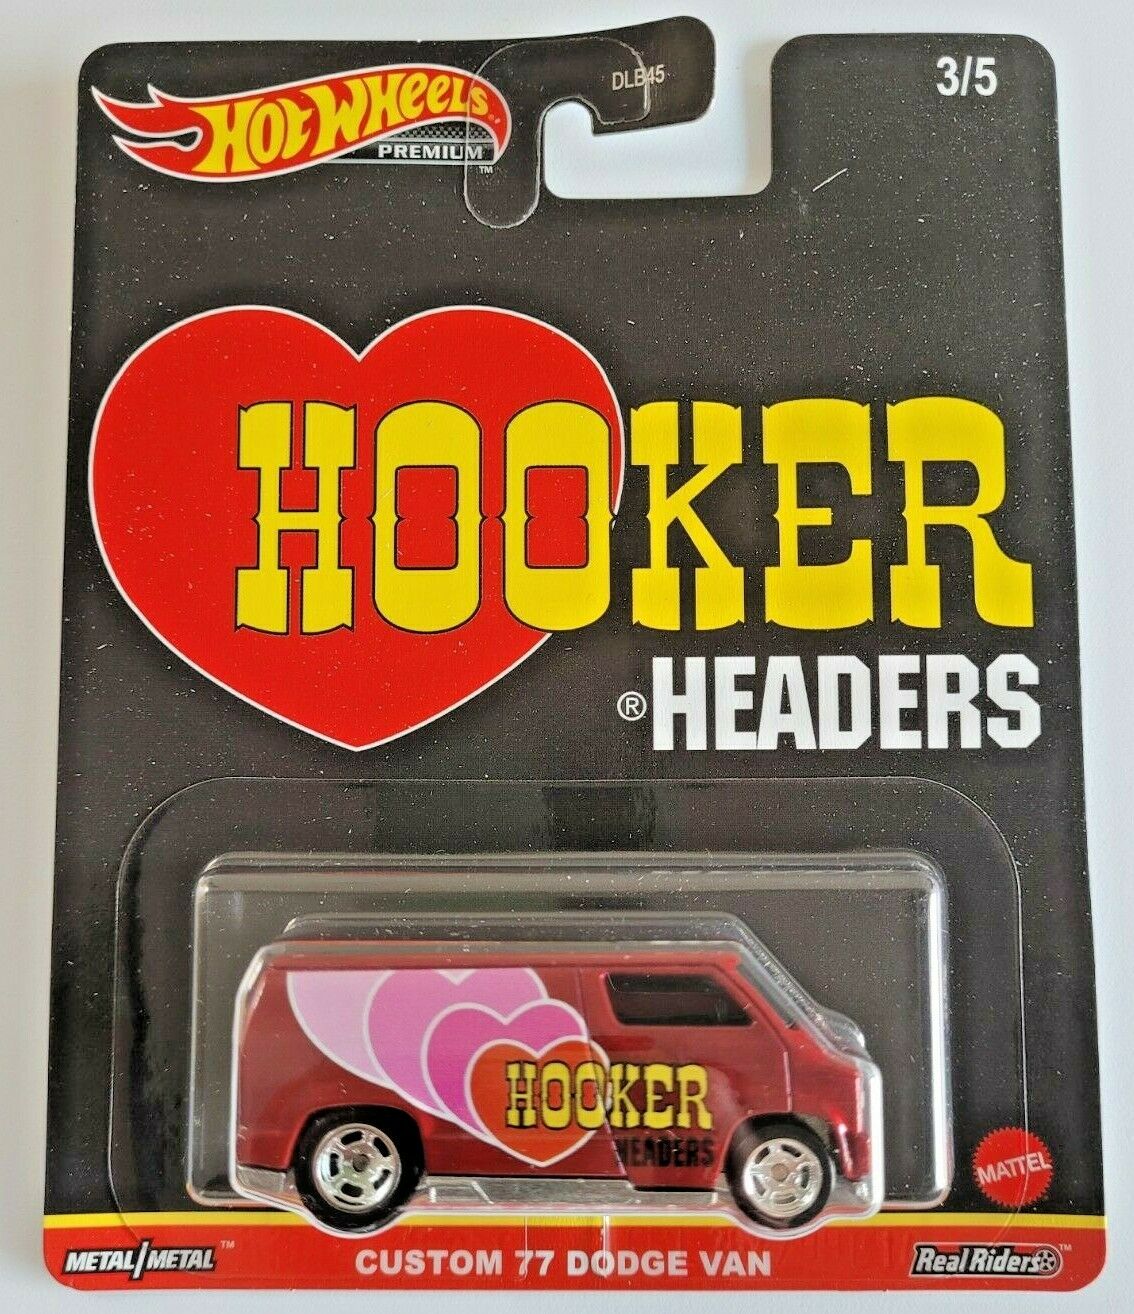 Hot Wheels Custom 77 Dodge Van Hooker Headers DLB45-946K 1/64 